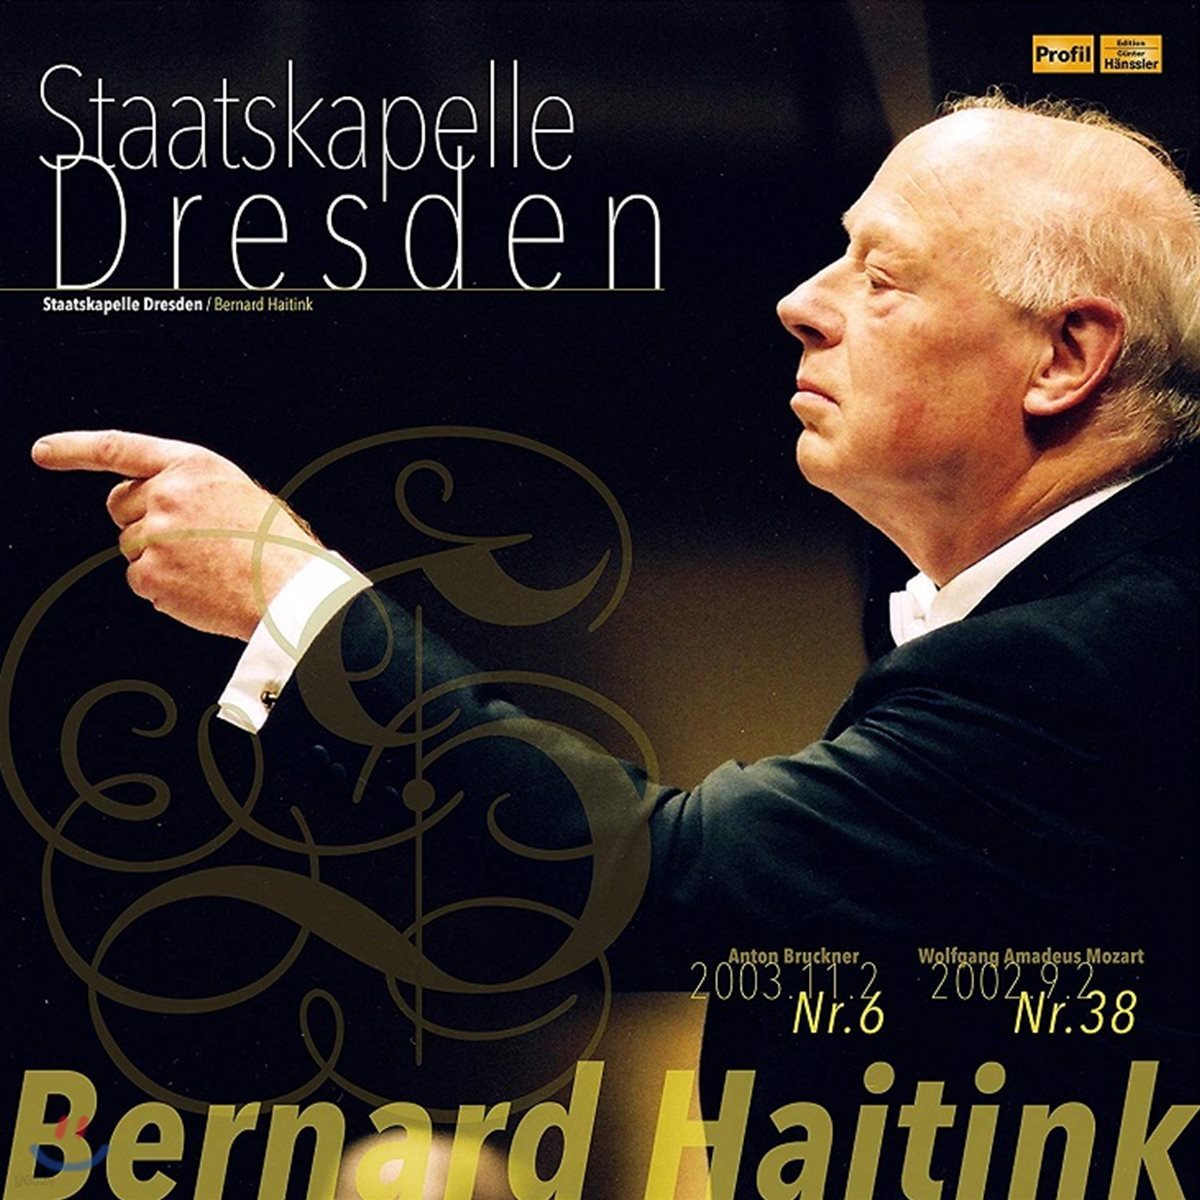 Bernard Haitink 브루크너: 교향곡 6번 / 모차르트: 교향곡 38번 (Bruckner: Symphony WAB106 / Mozart: Symphony K.504) 베르나르트 하이팅크, 드레스덴 슈타츠카펠레 [2LP]